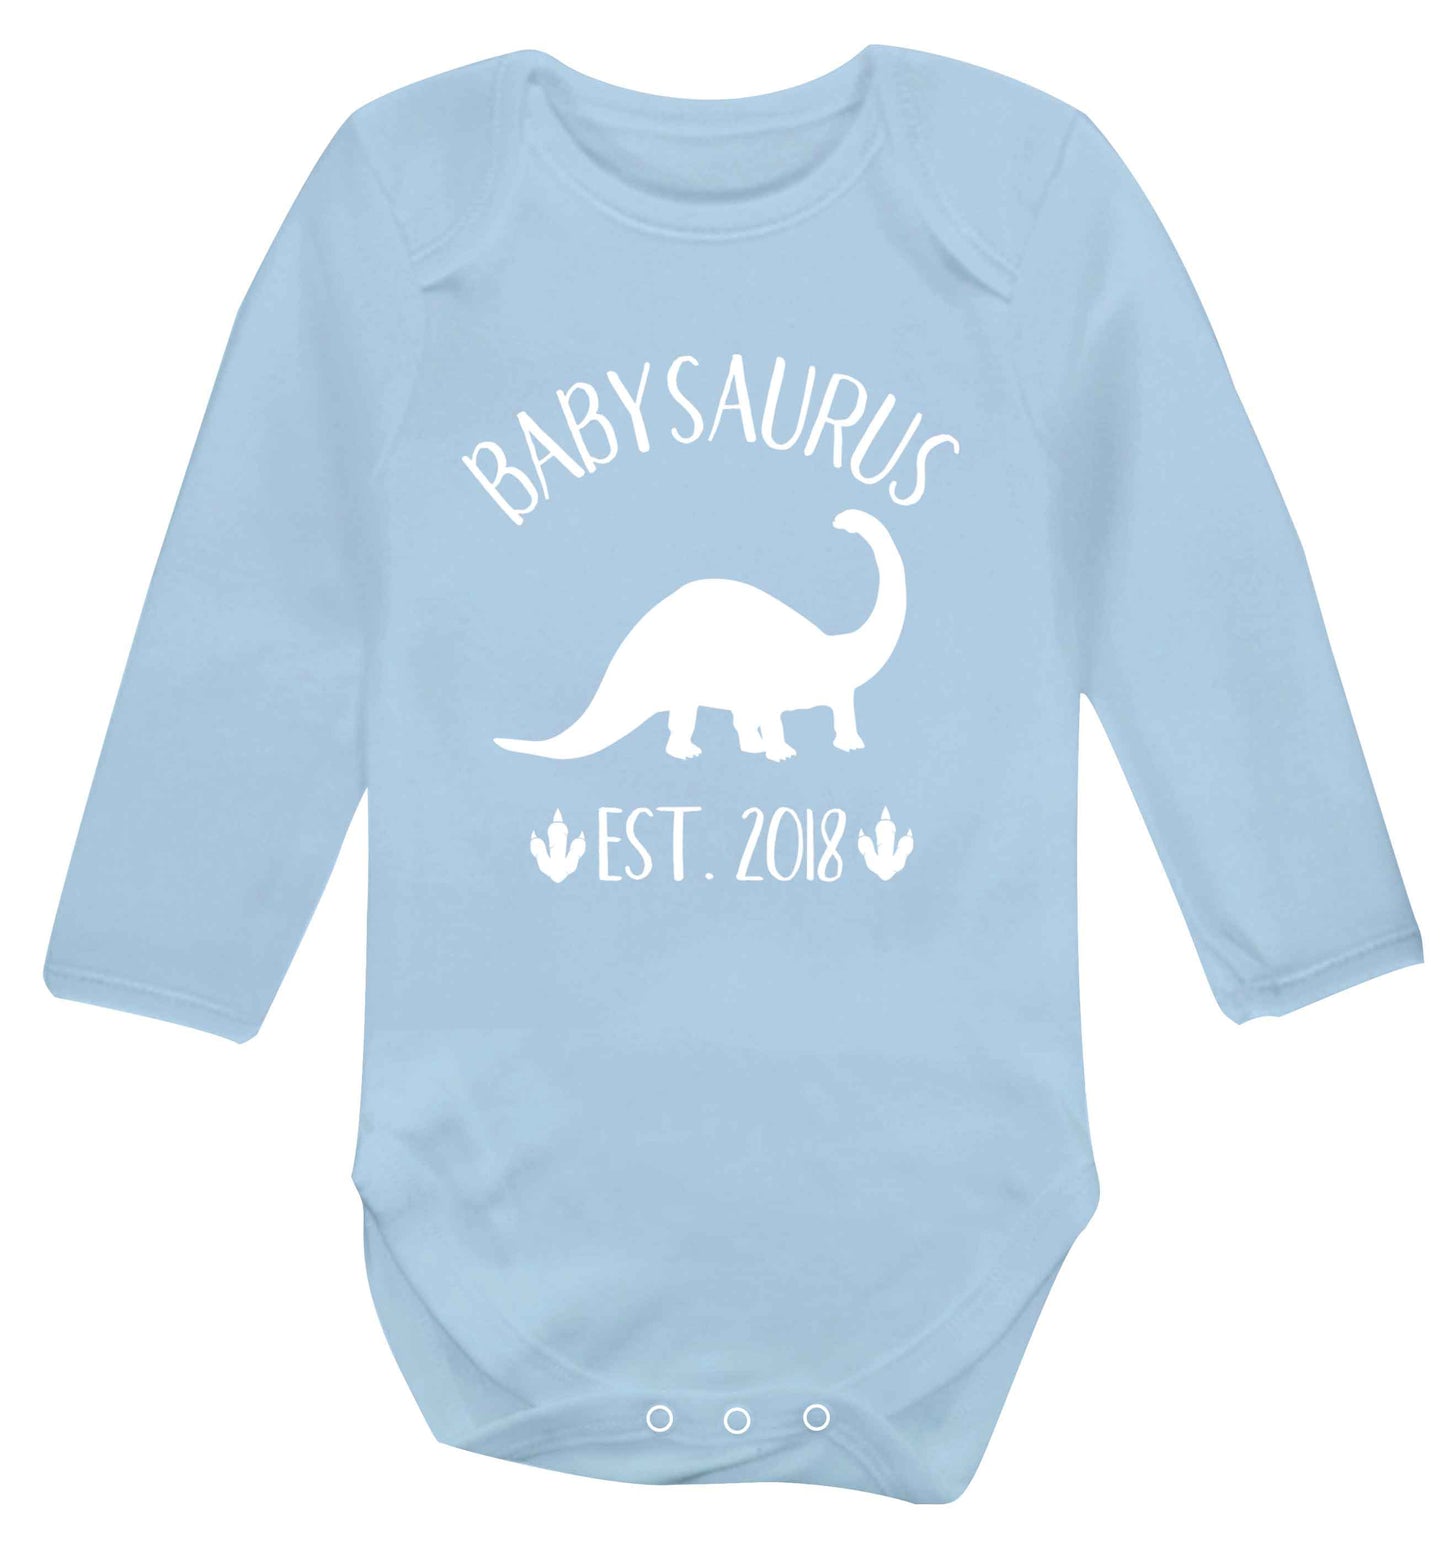 Personalised babysaurus since (custom date) Baby Vest long sleeved pale blue 6-12 months